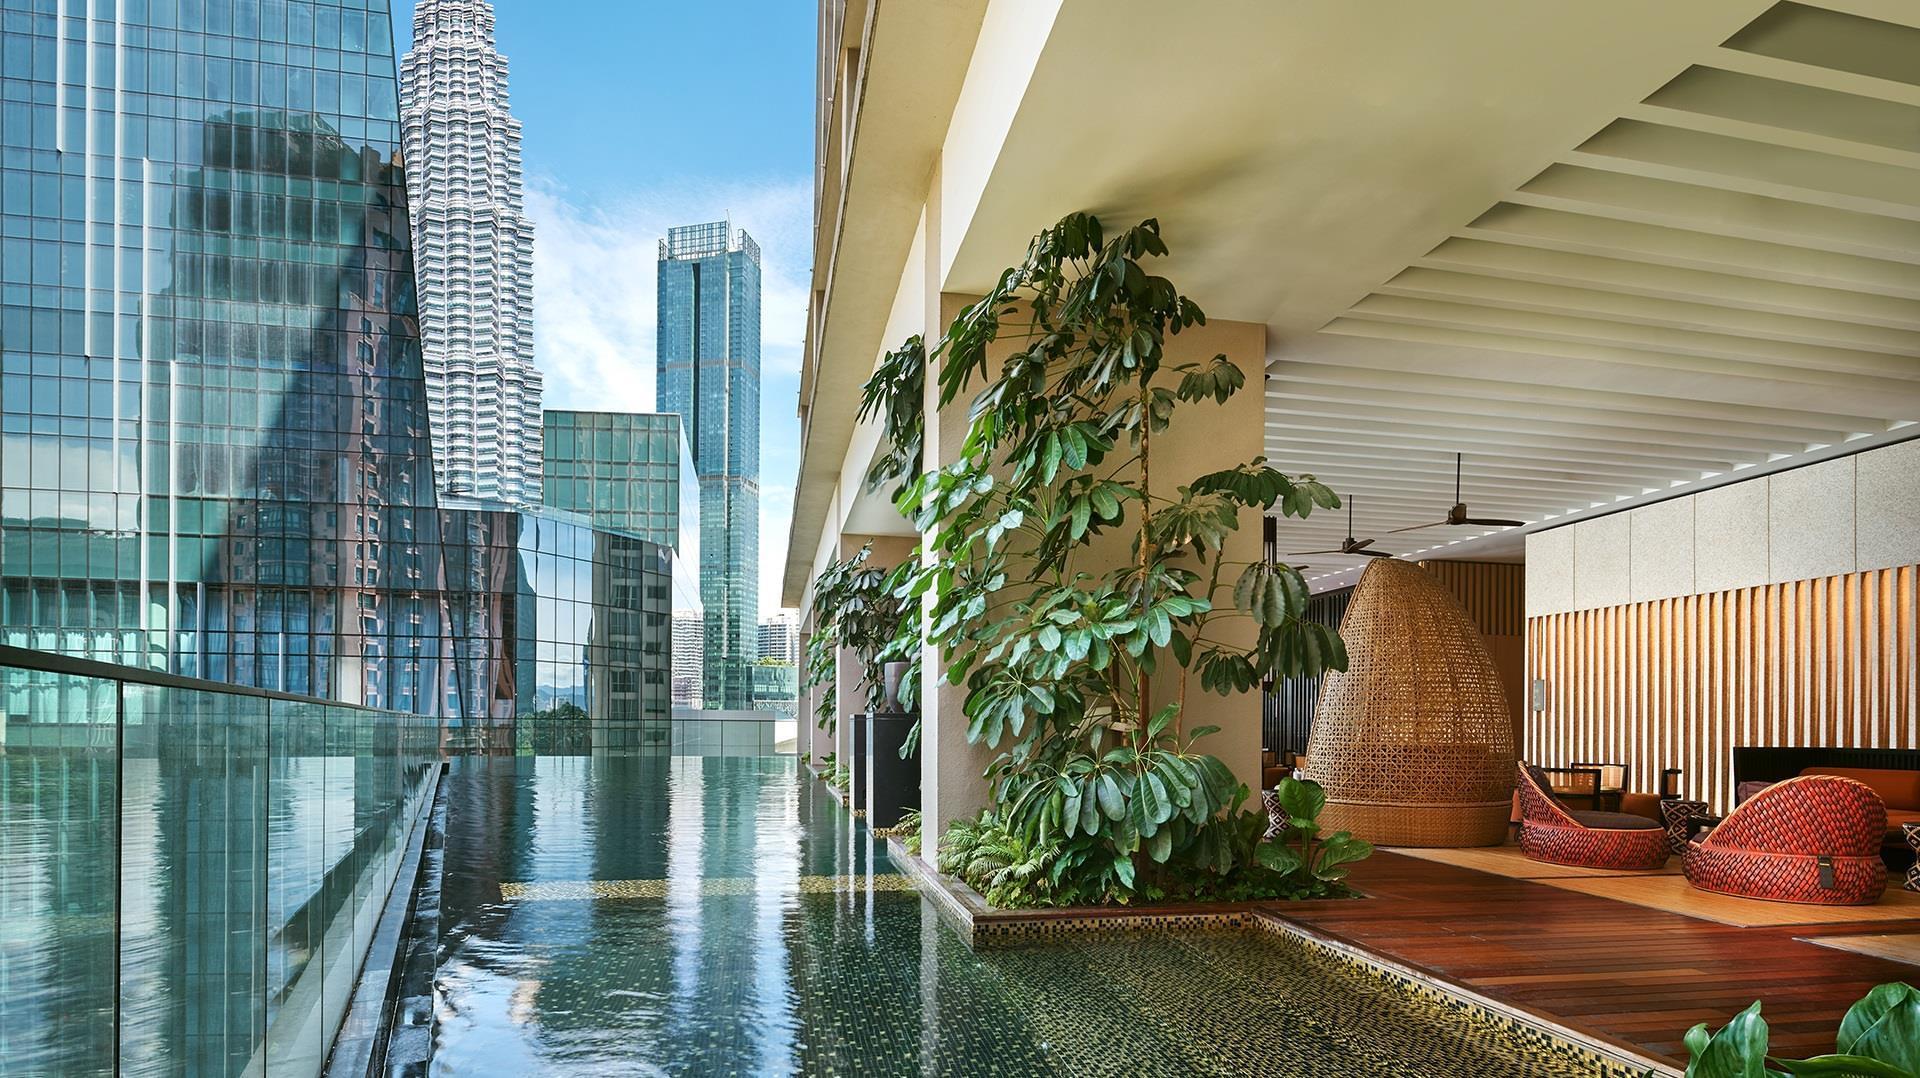 The RuMa Hotel and Residences in Kuala Lumpur, MY